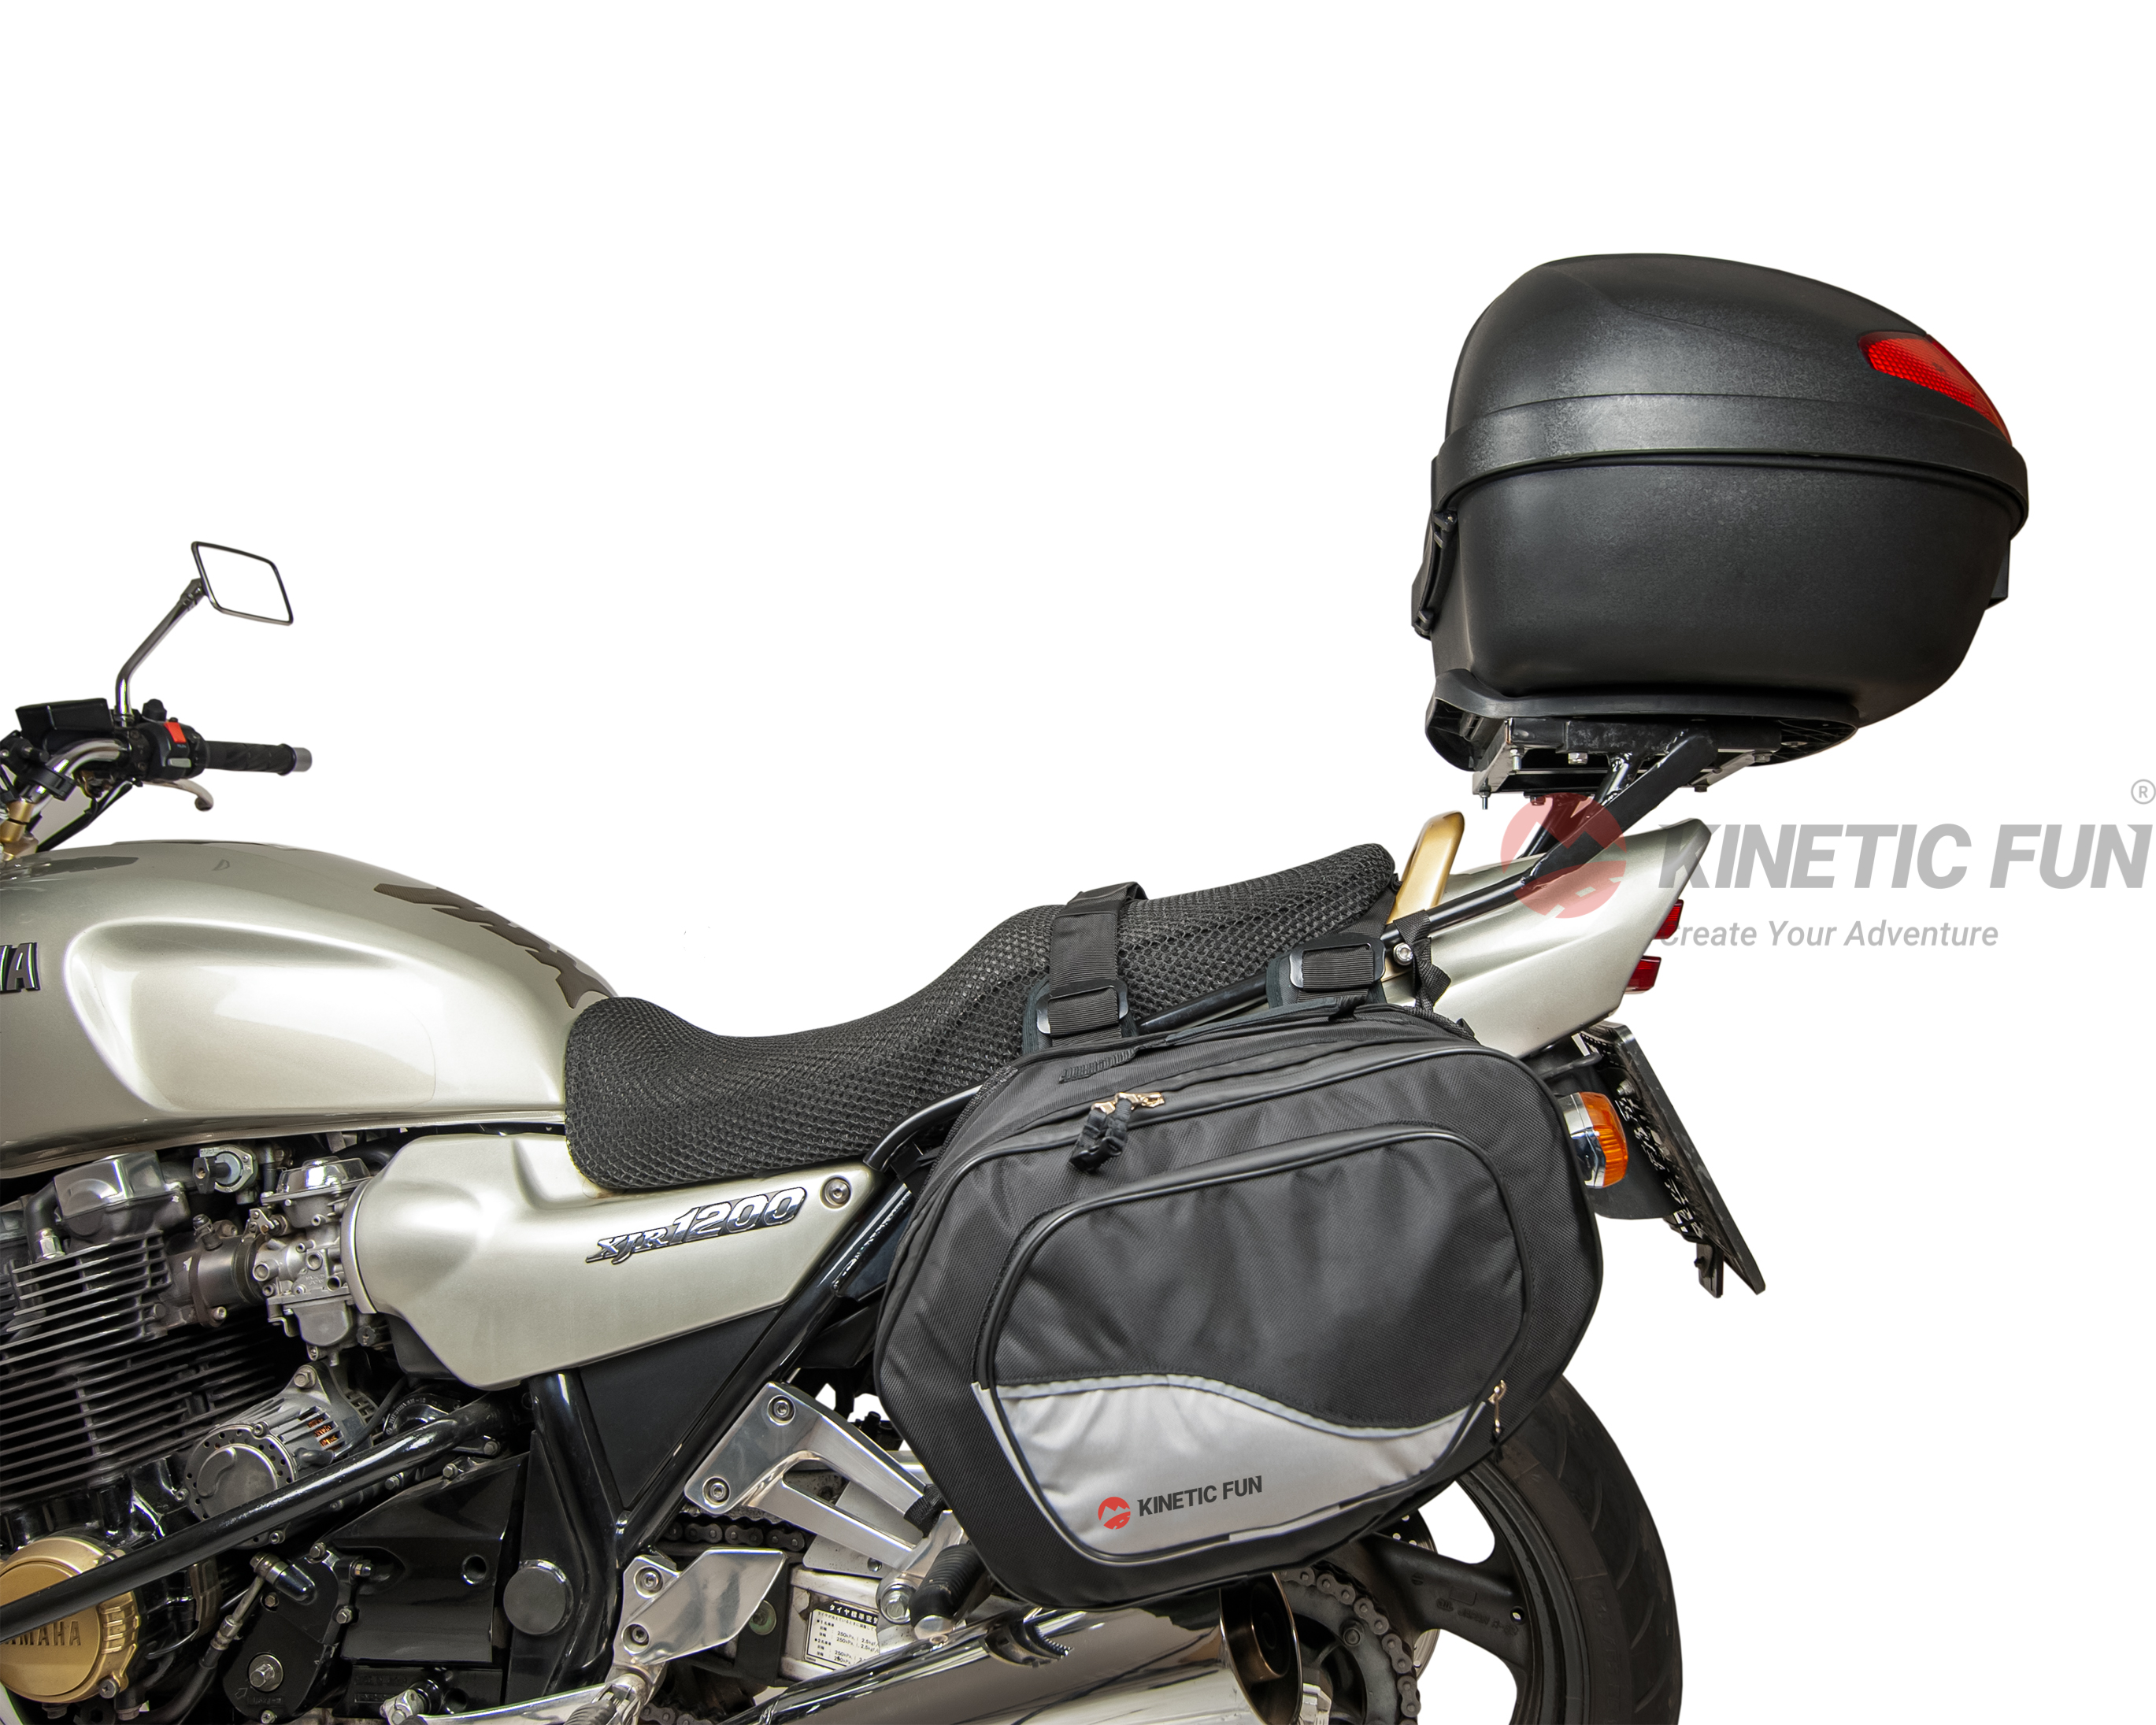 Сумки для мотоцикла Honda PCX 125 - боковые Road Evo (пара), объём 34-46 литров